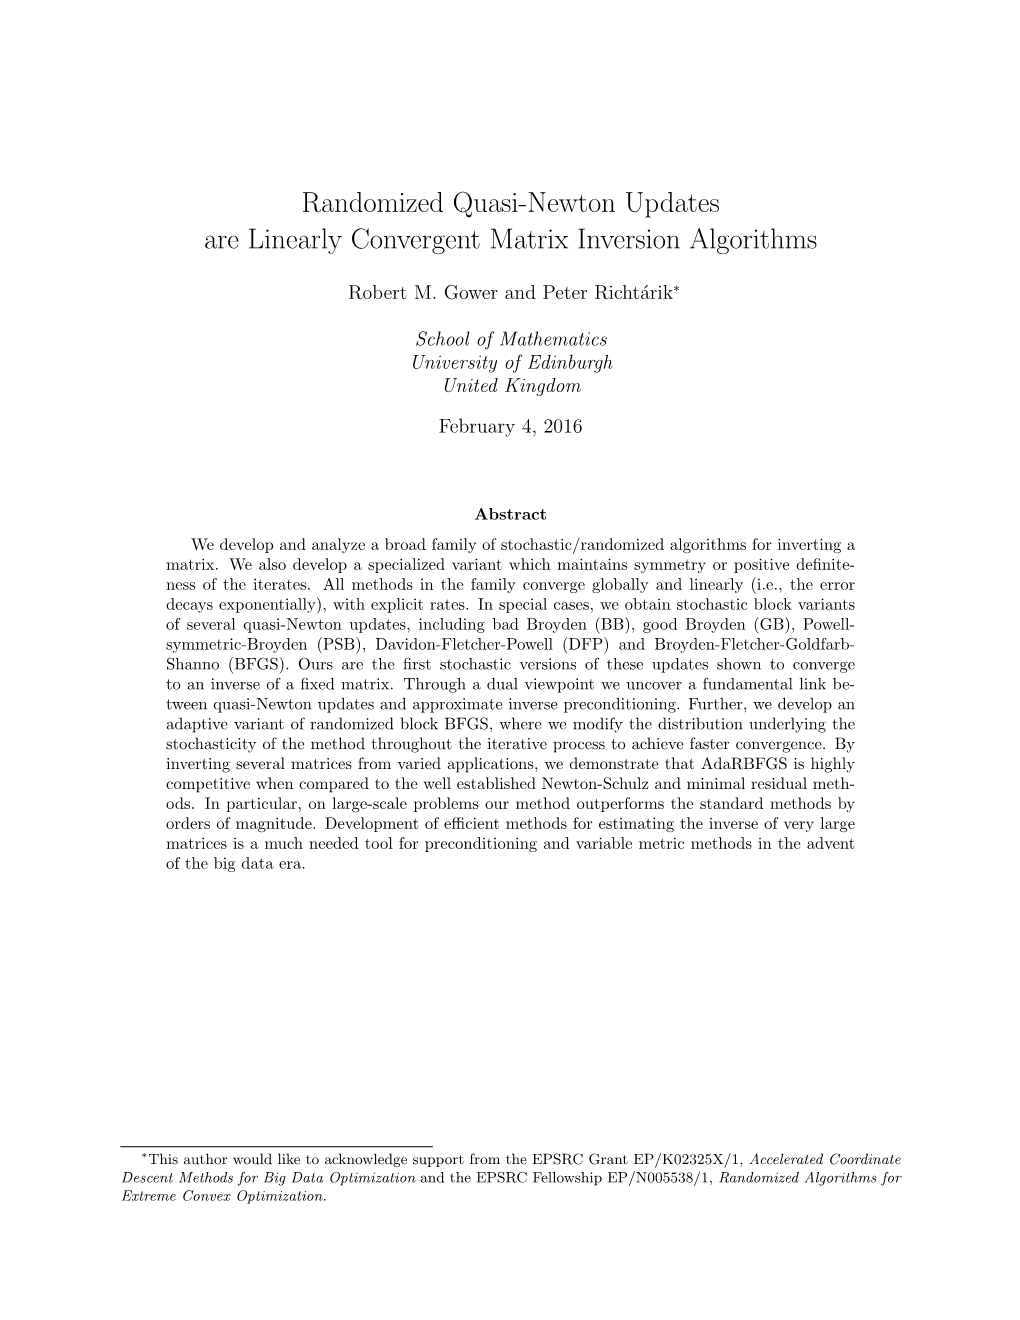 Randomized Quasi-Newton Updates Are Linearly Convergent Matrix Inversion Algorithms